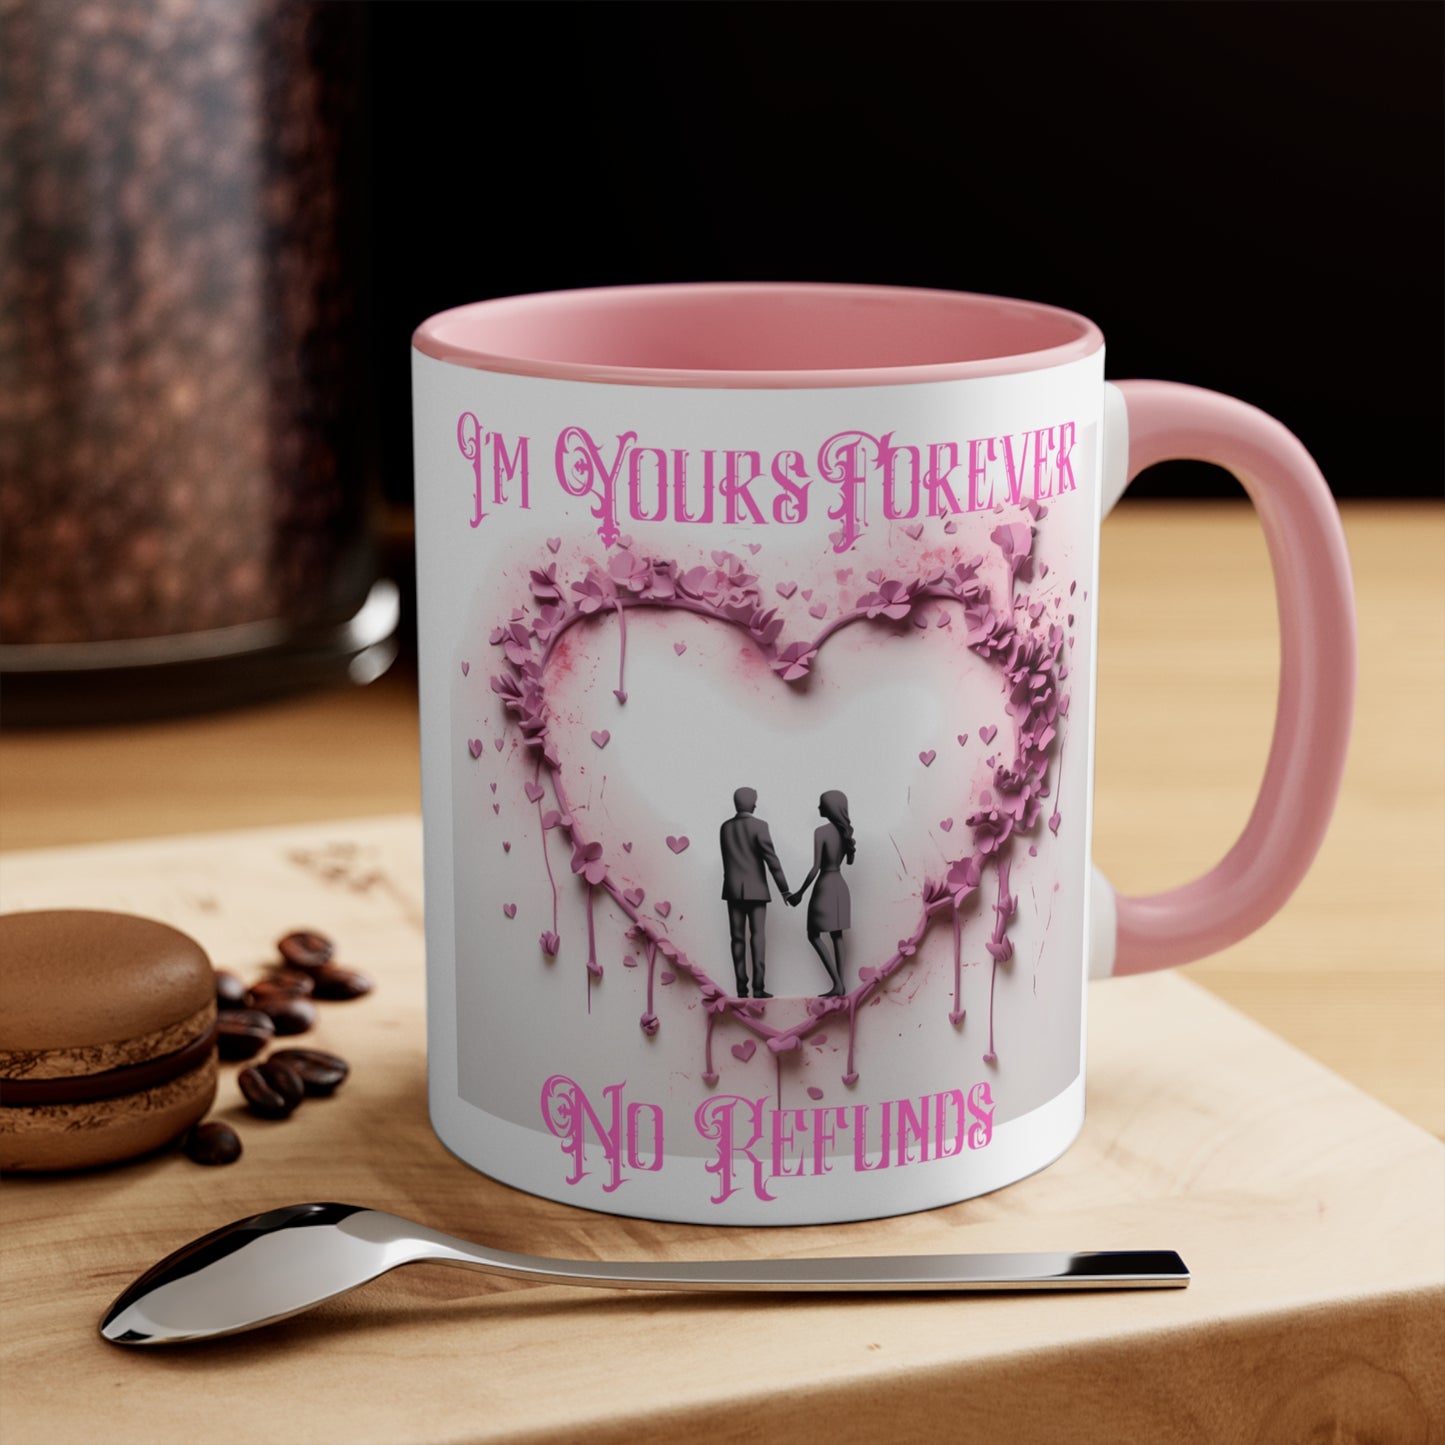 3D Heart Mug 11oz and 15ozc Ceramic mug, mug design, Valentine's Day, Mother's Day gift, Gift for her, Be My Valentine mug, Romantic mug